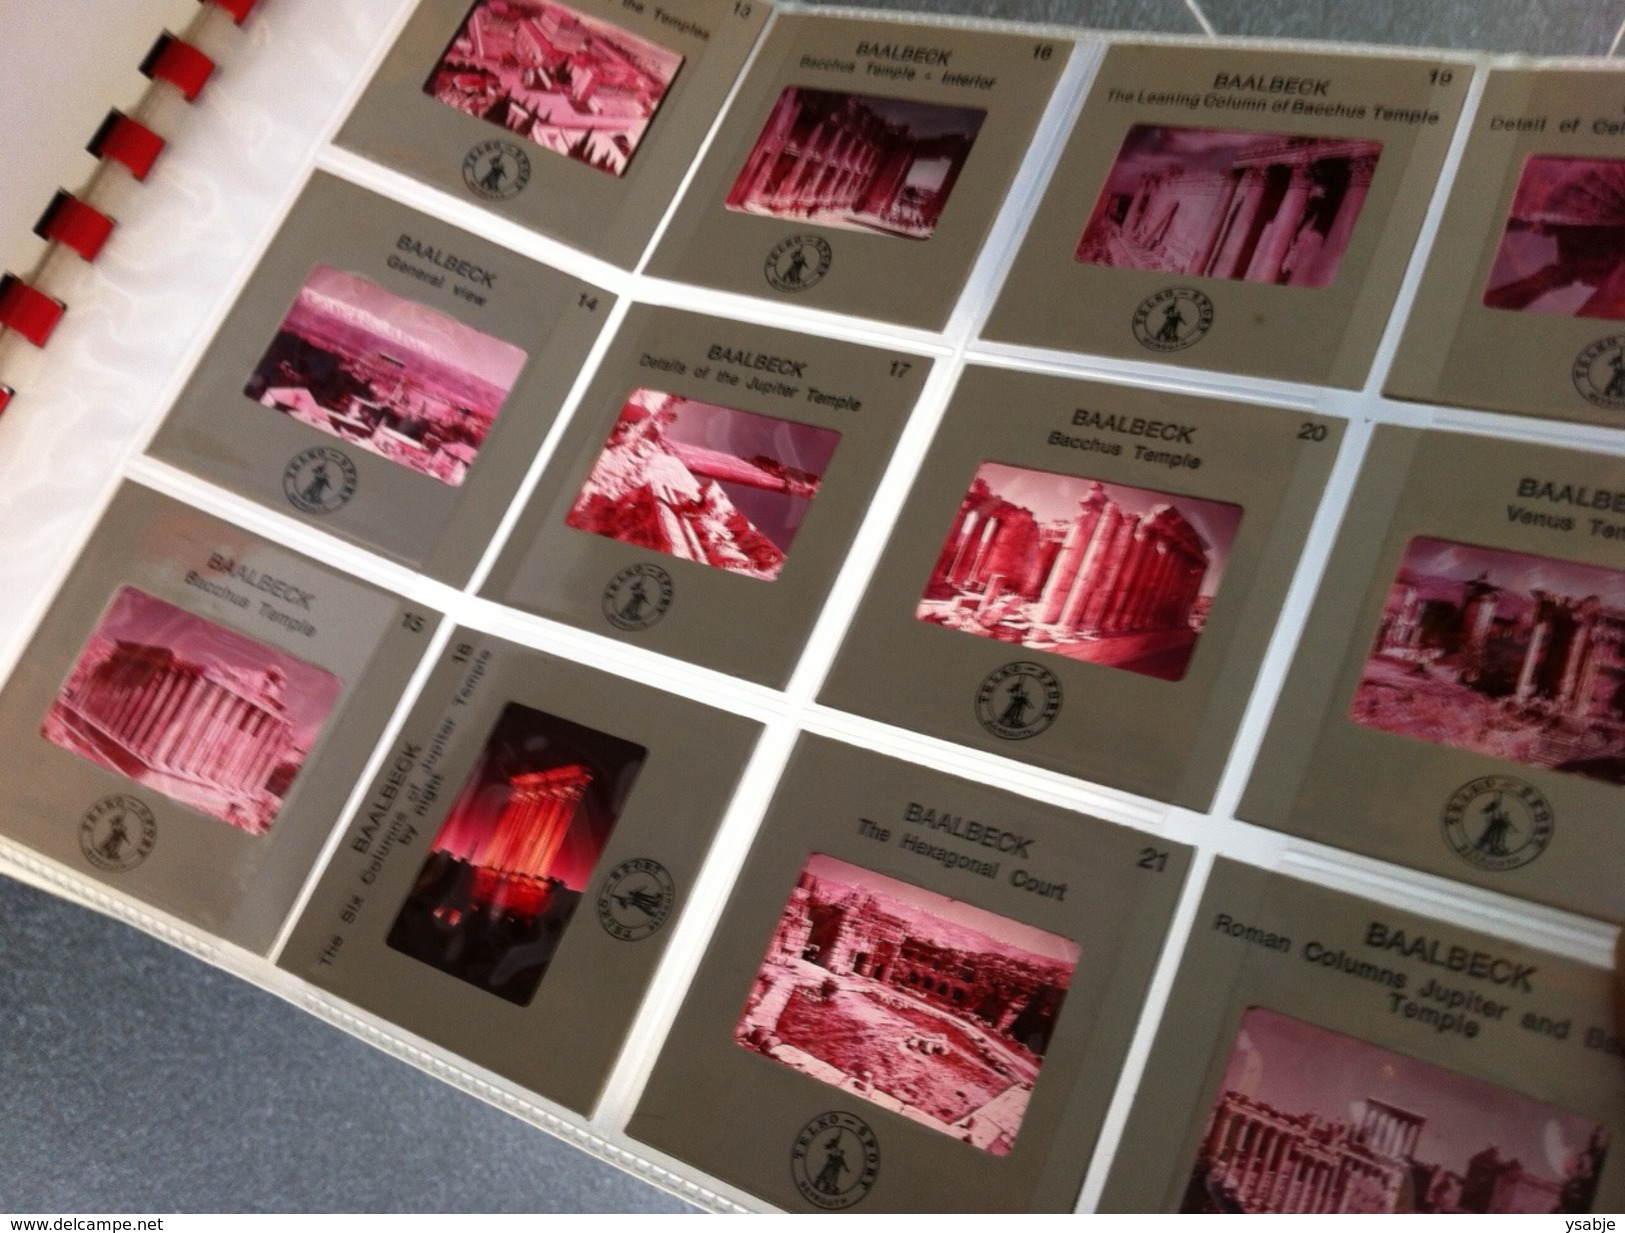 Lebanon - a 60 color slides guide book on kodak film - zeldzaam